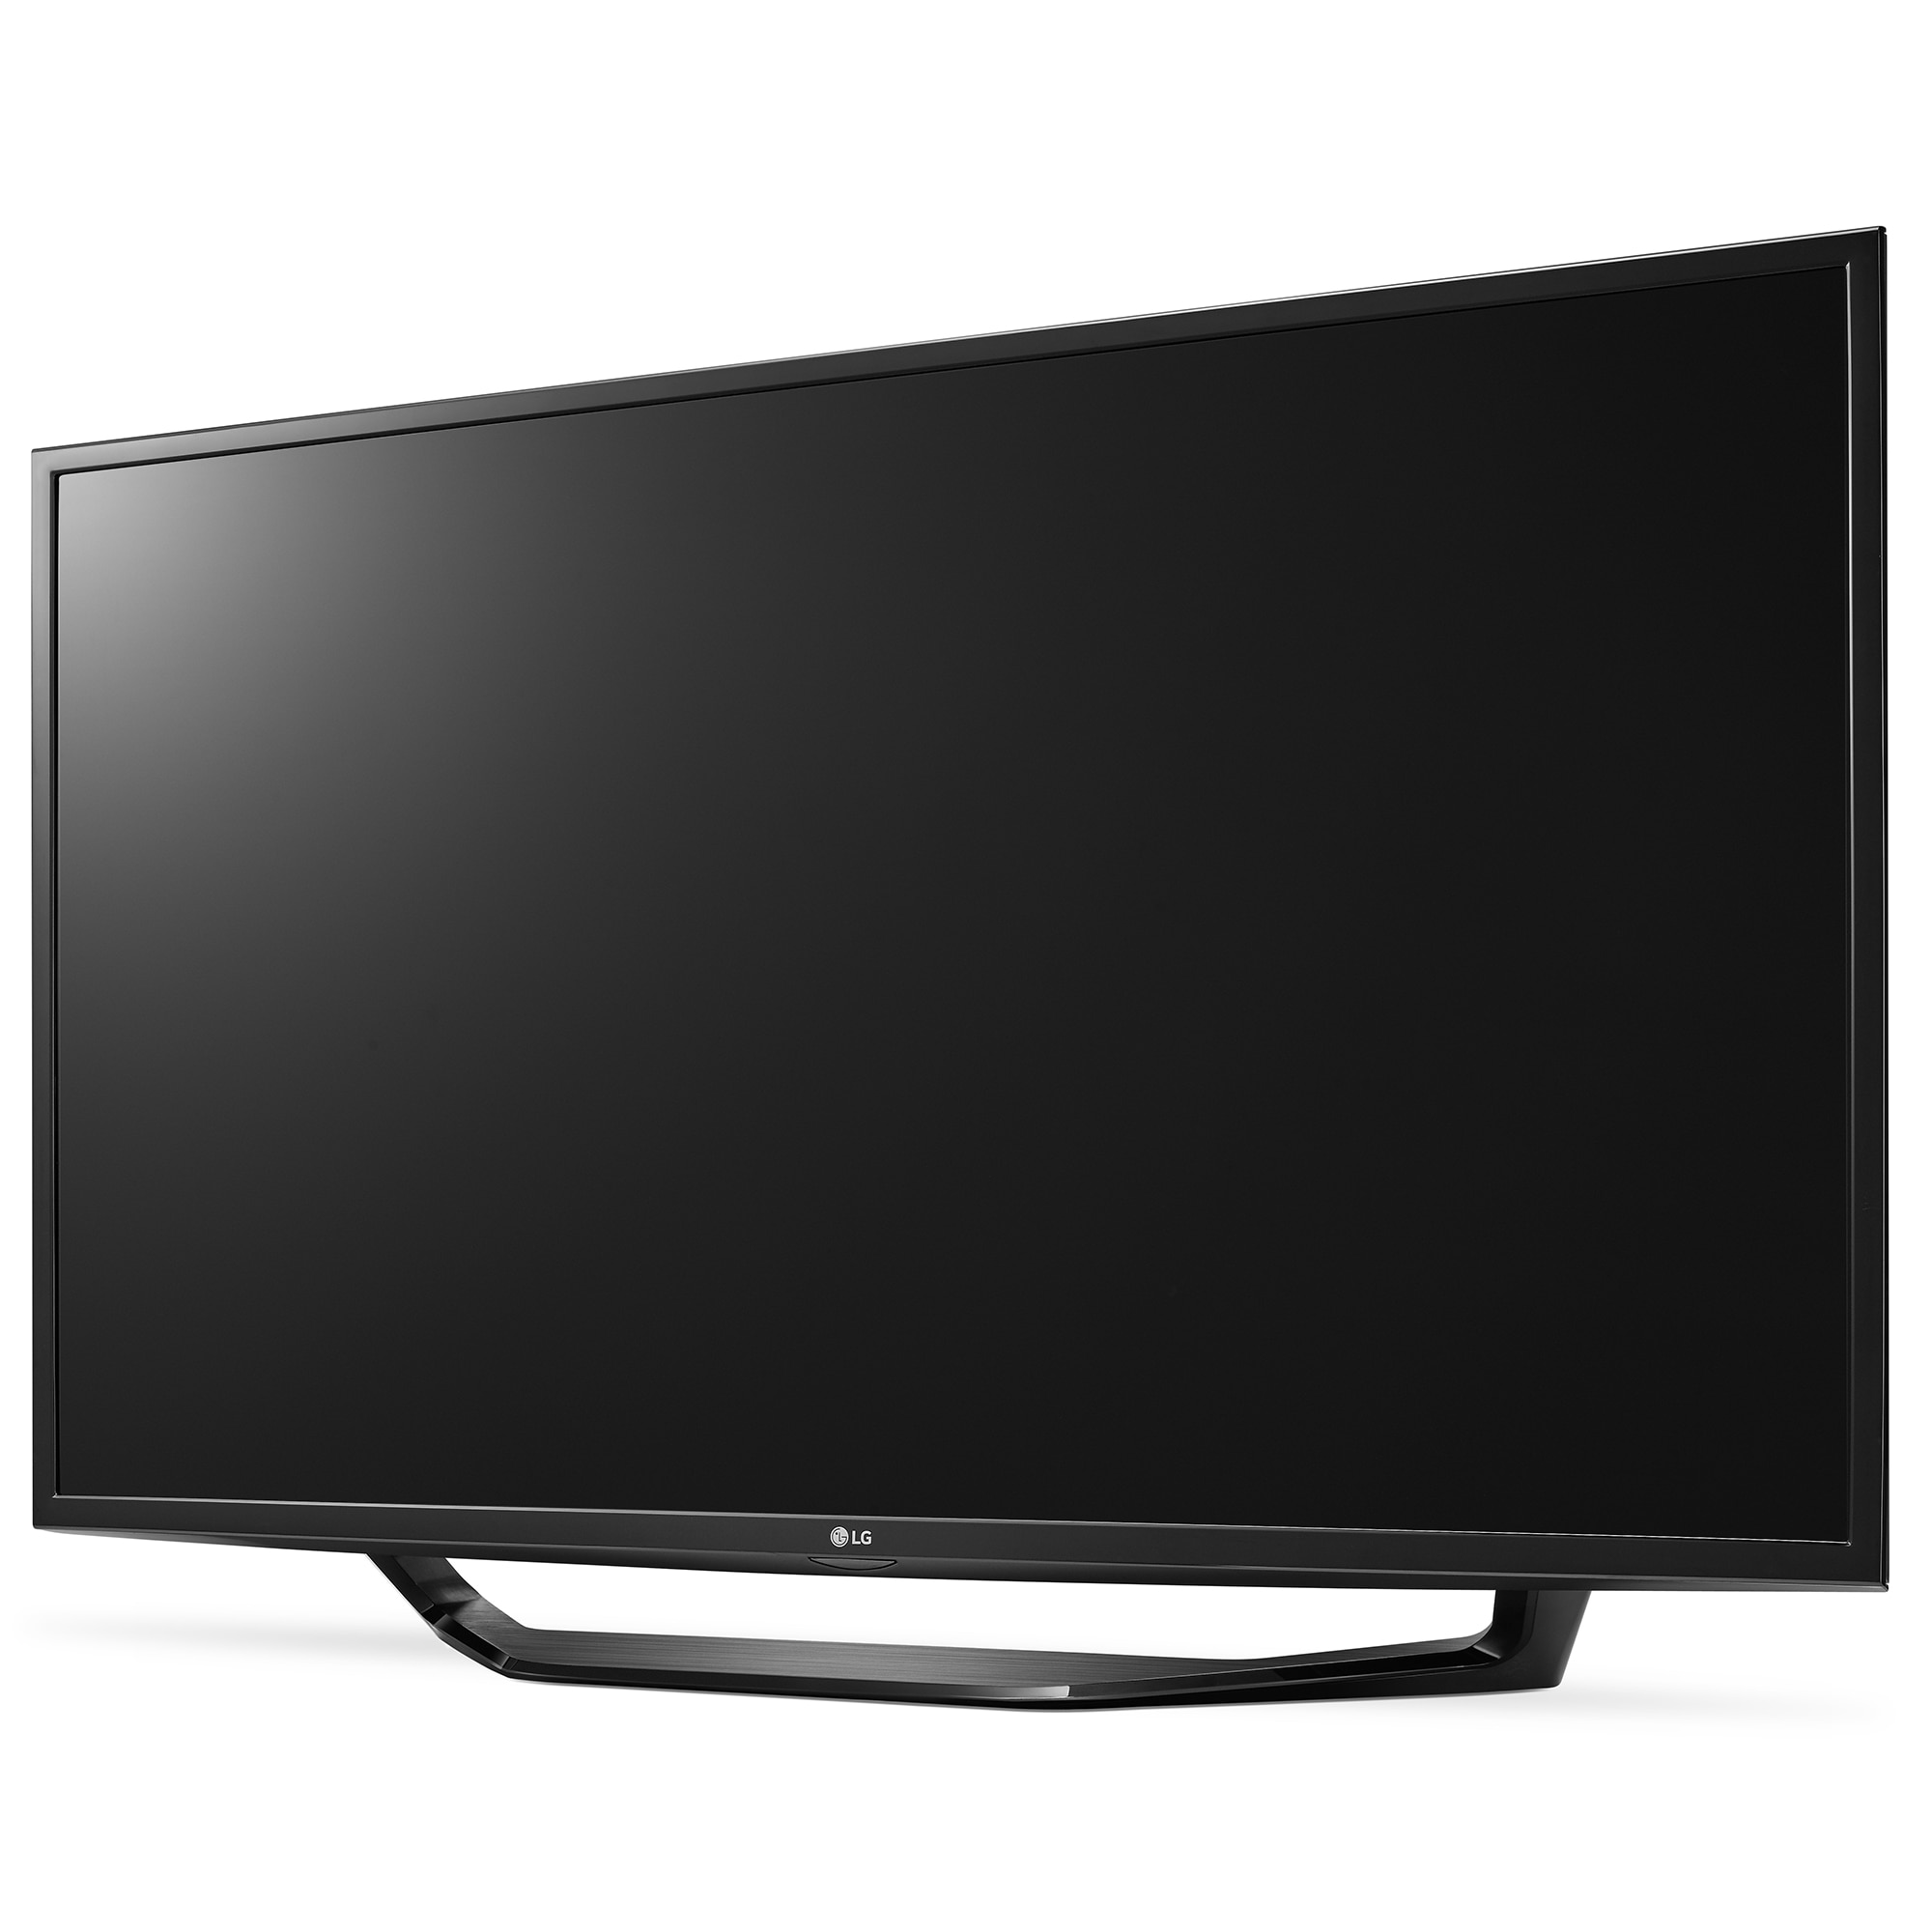 Куплю недорого телевизор lg. Телевизор LG 43lh510v. LG 43lj515v. Телевизор LG 49lj515v. Телевизор LG 43lj515v.